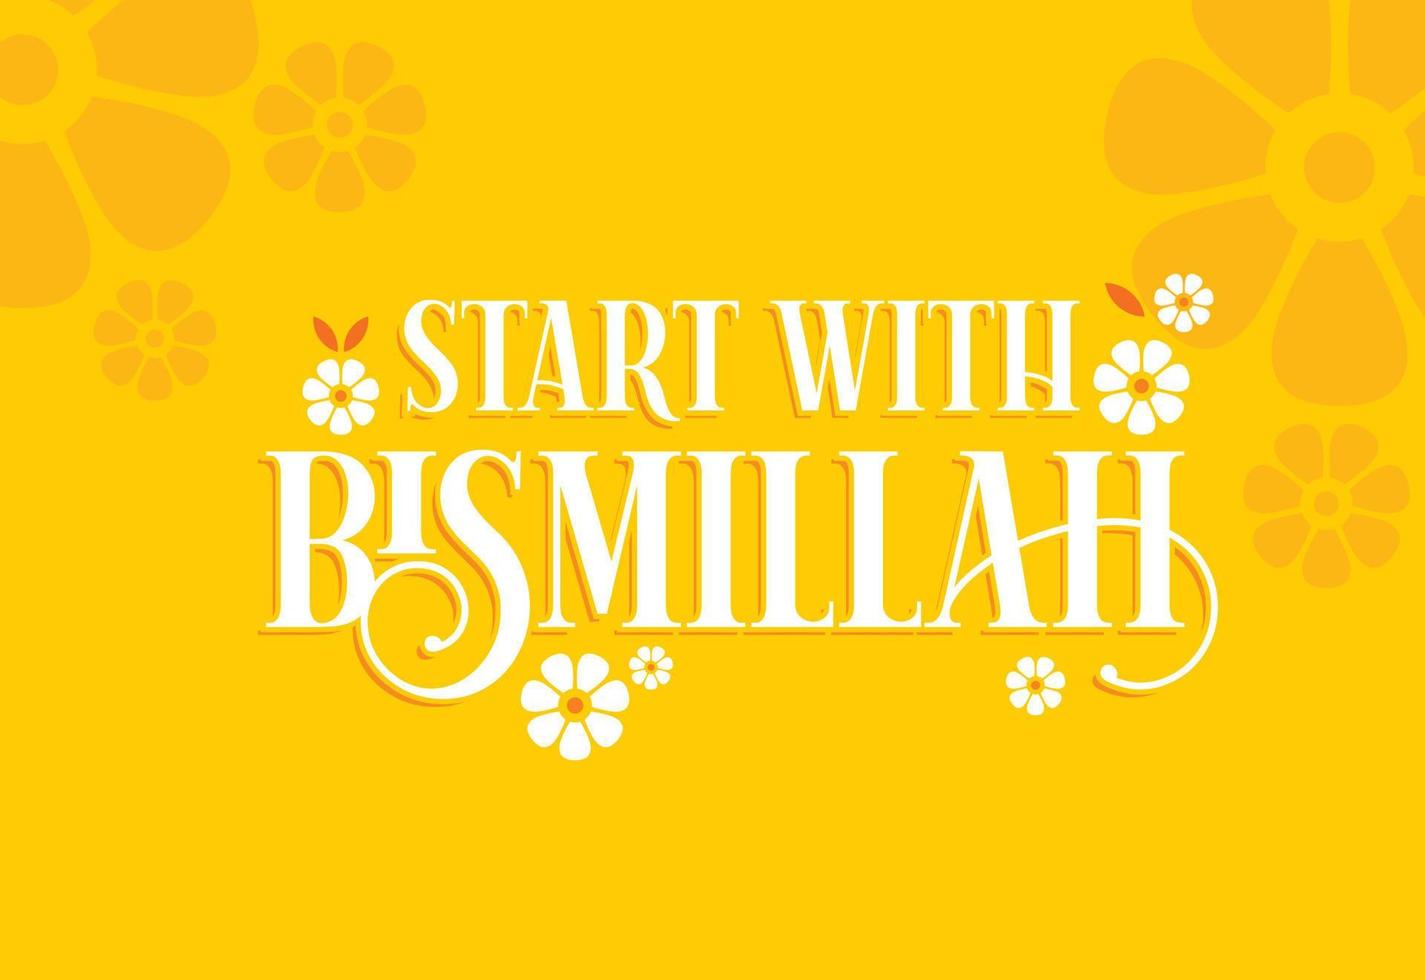 Bismillah vector. Begin everything with the name of Allah. Speaking of Bismillah vector